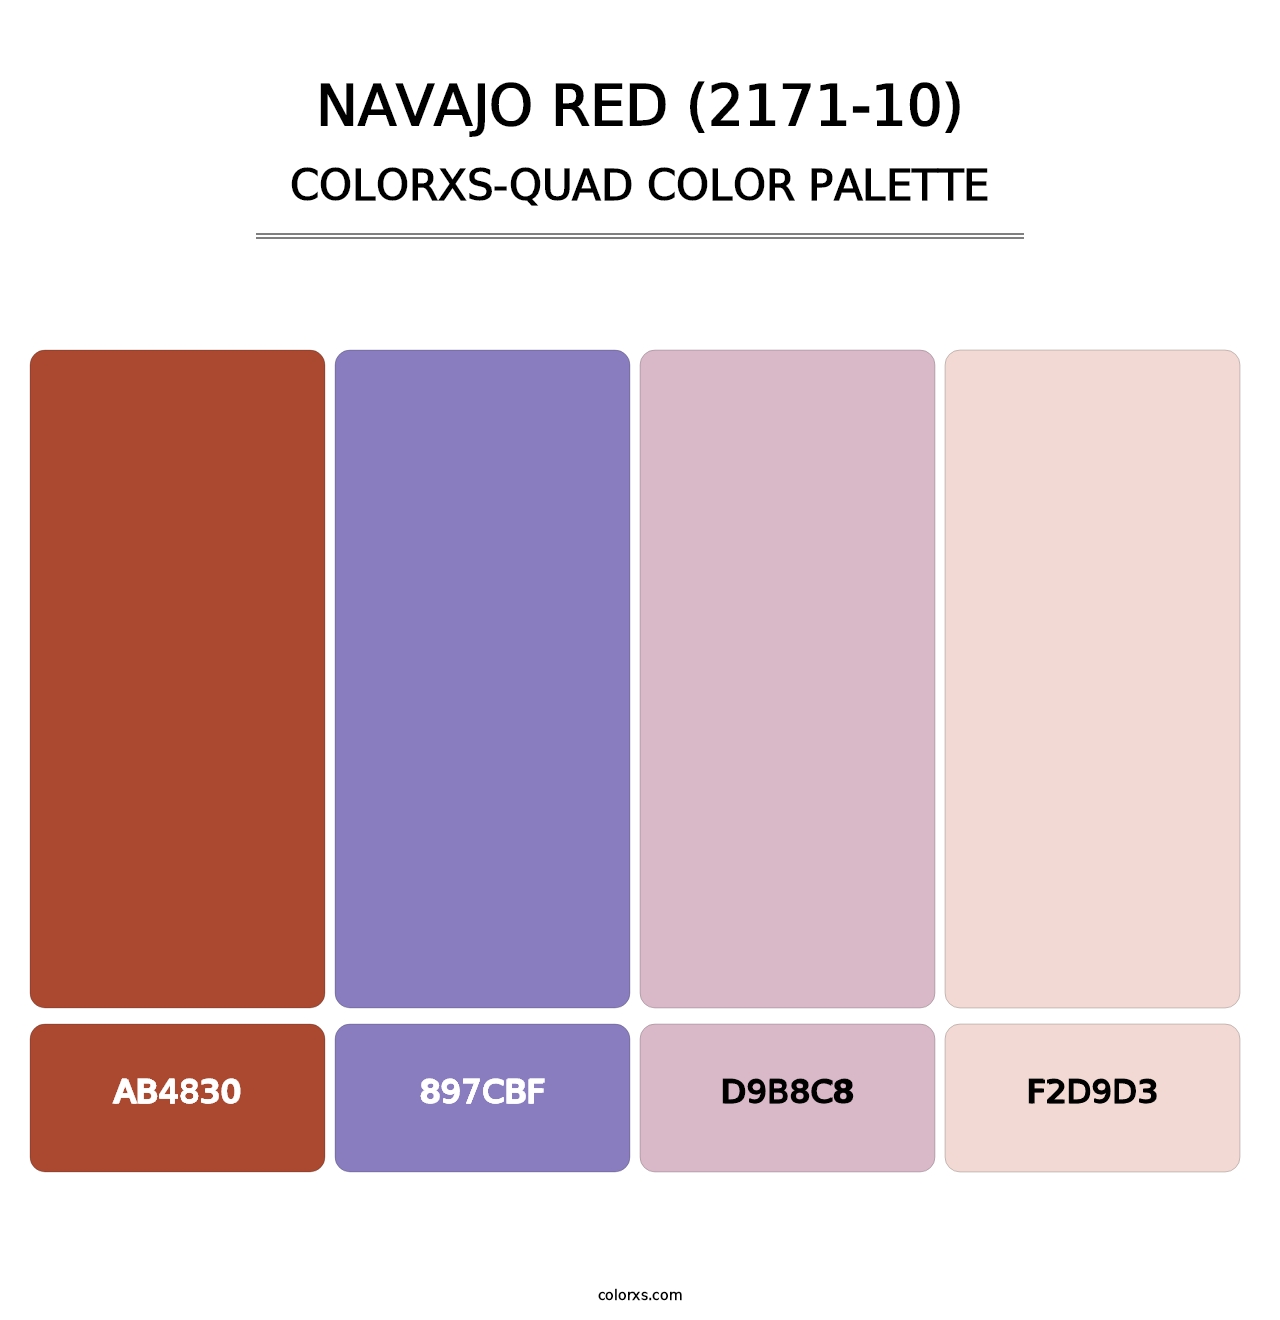 Navajo Red (2171-10) - Colorxs Quad Palette